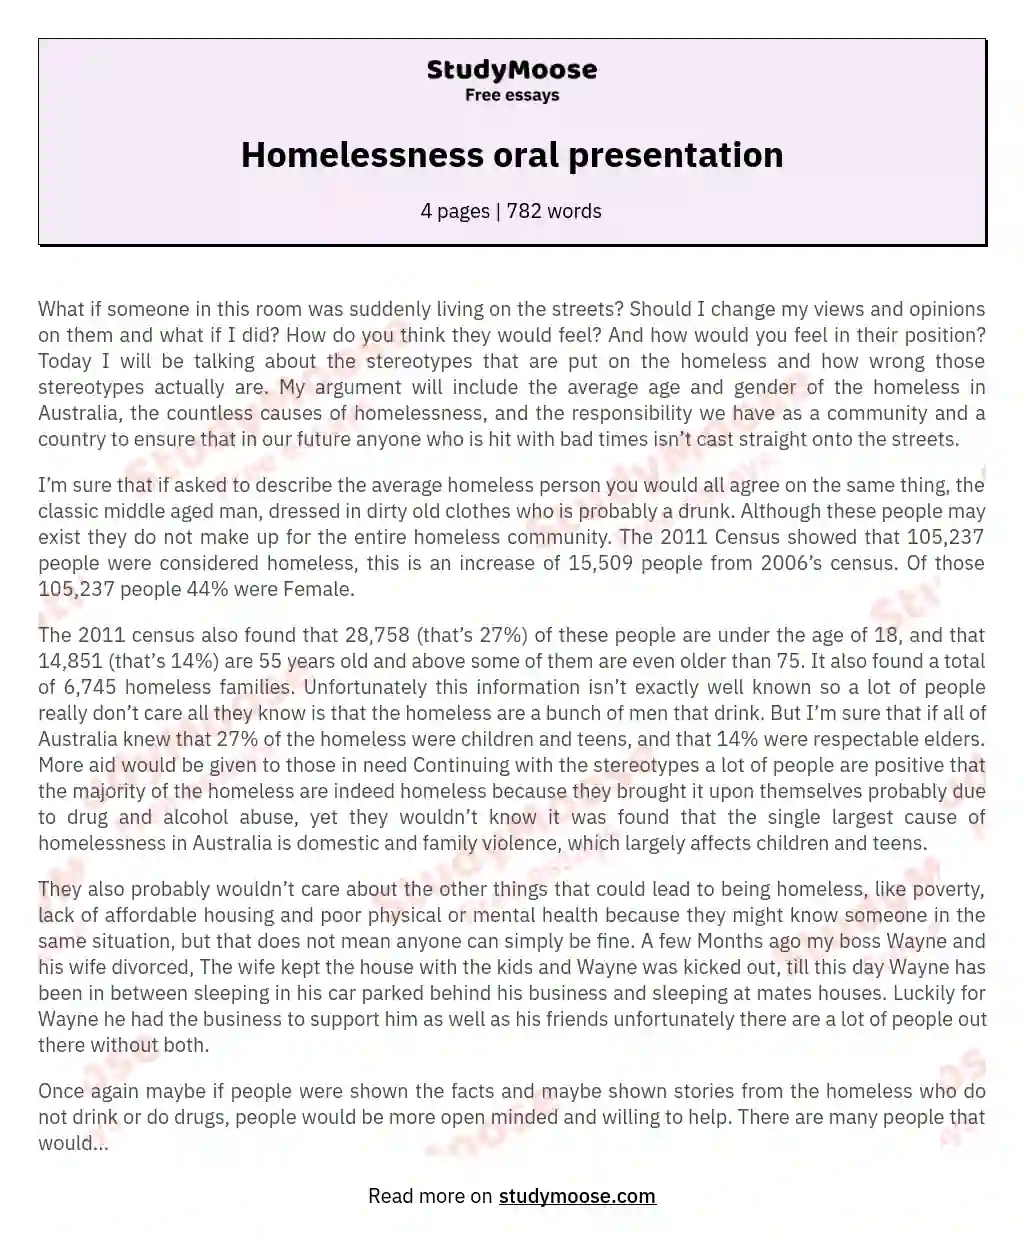 Homelessness oral presentation essay